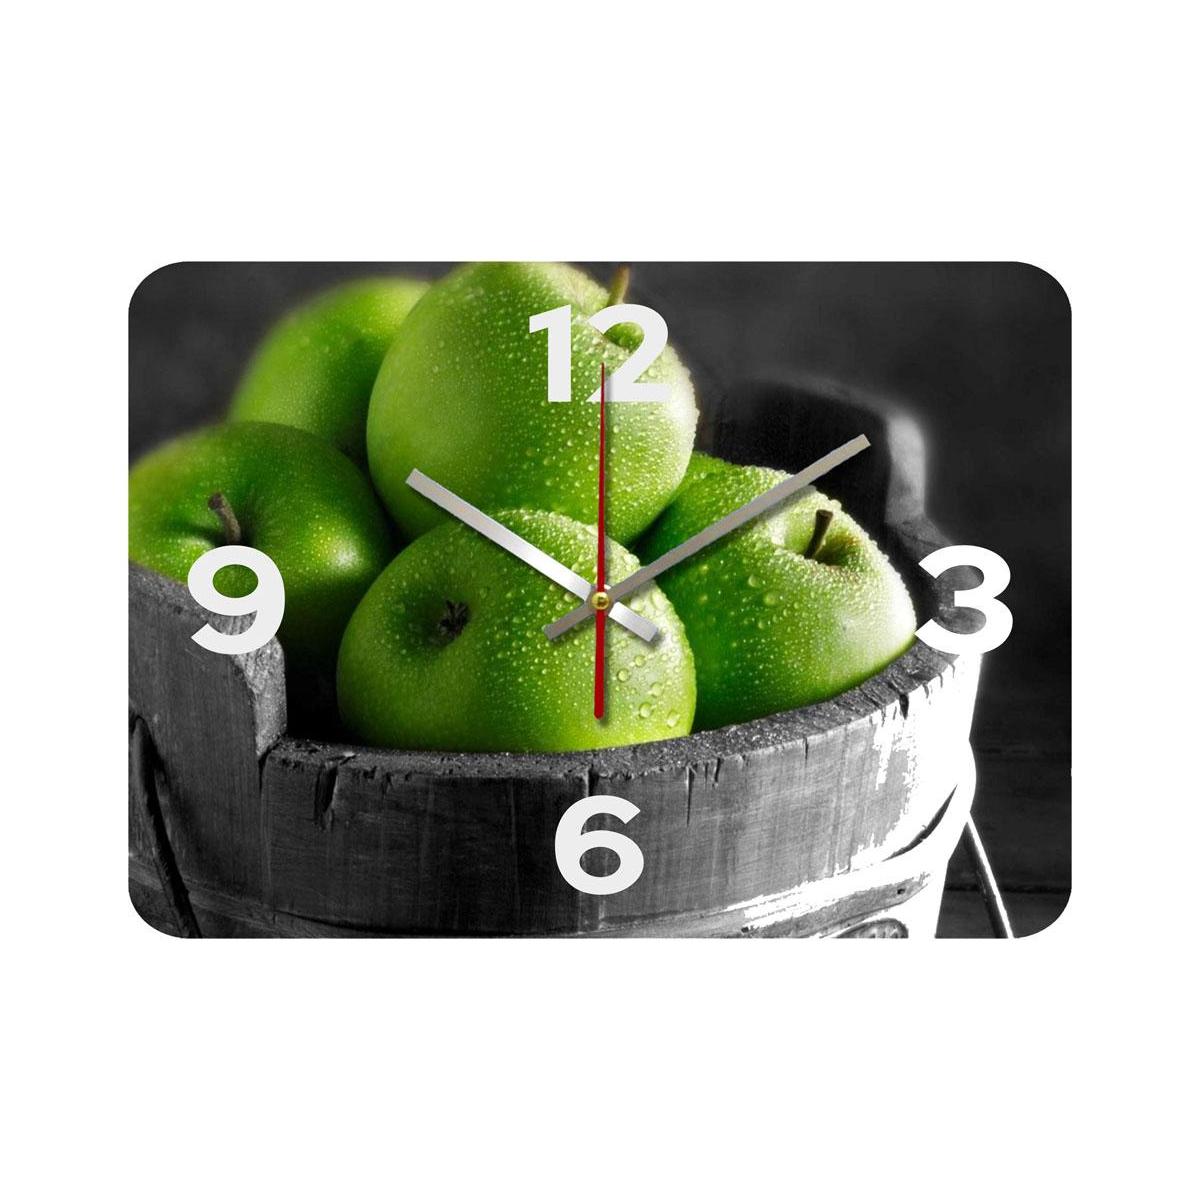 Jam Dinding Unik - Green Apple